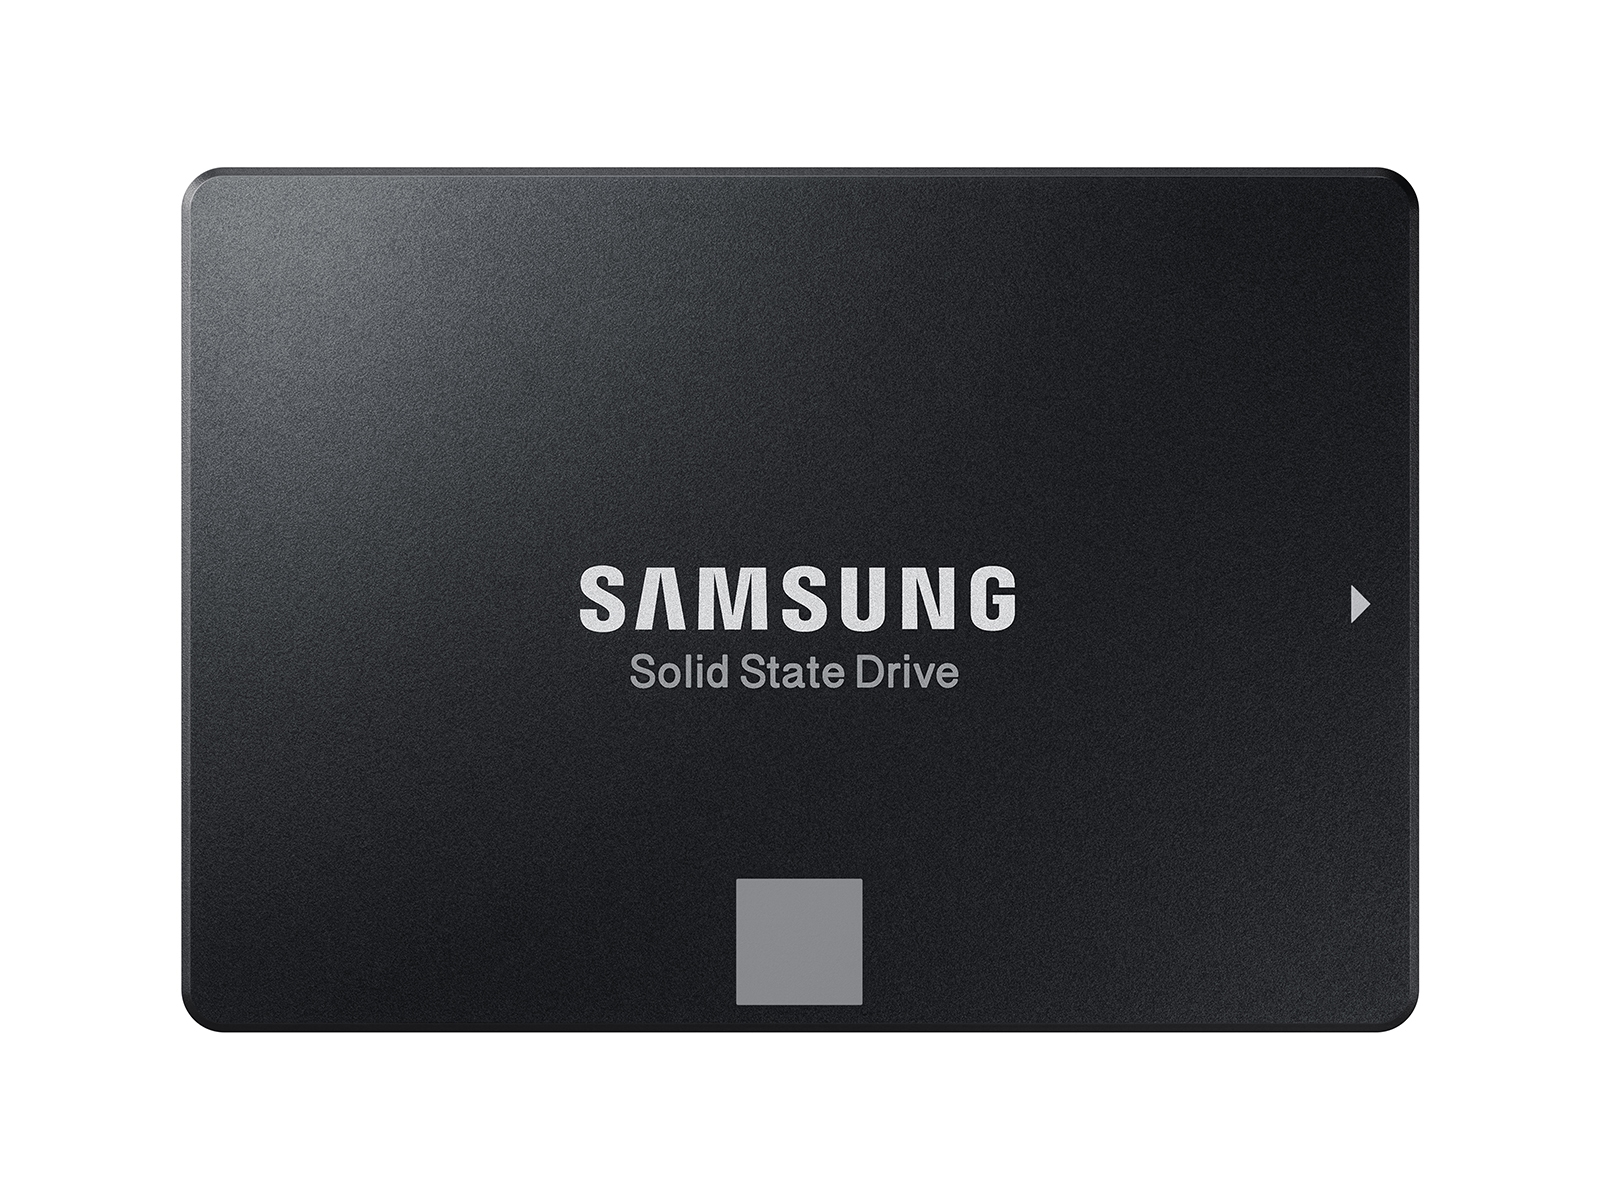 SSD 860 EVO 2.5 inch SATA III 4TB Memory & Storage MZ-76E4T0B/AM | Samsung US